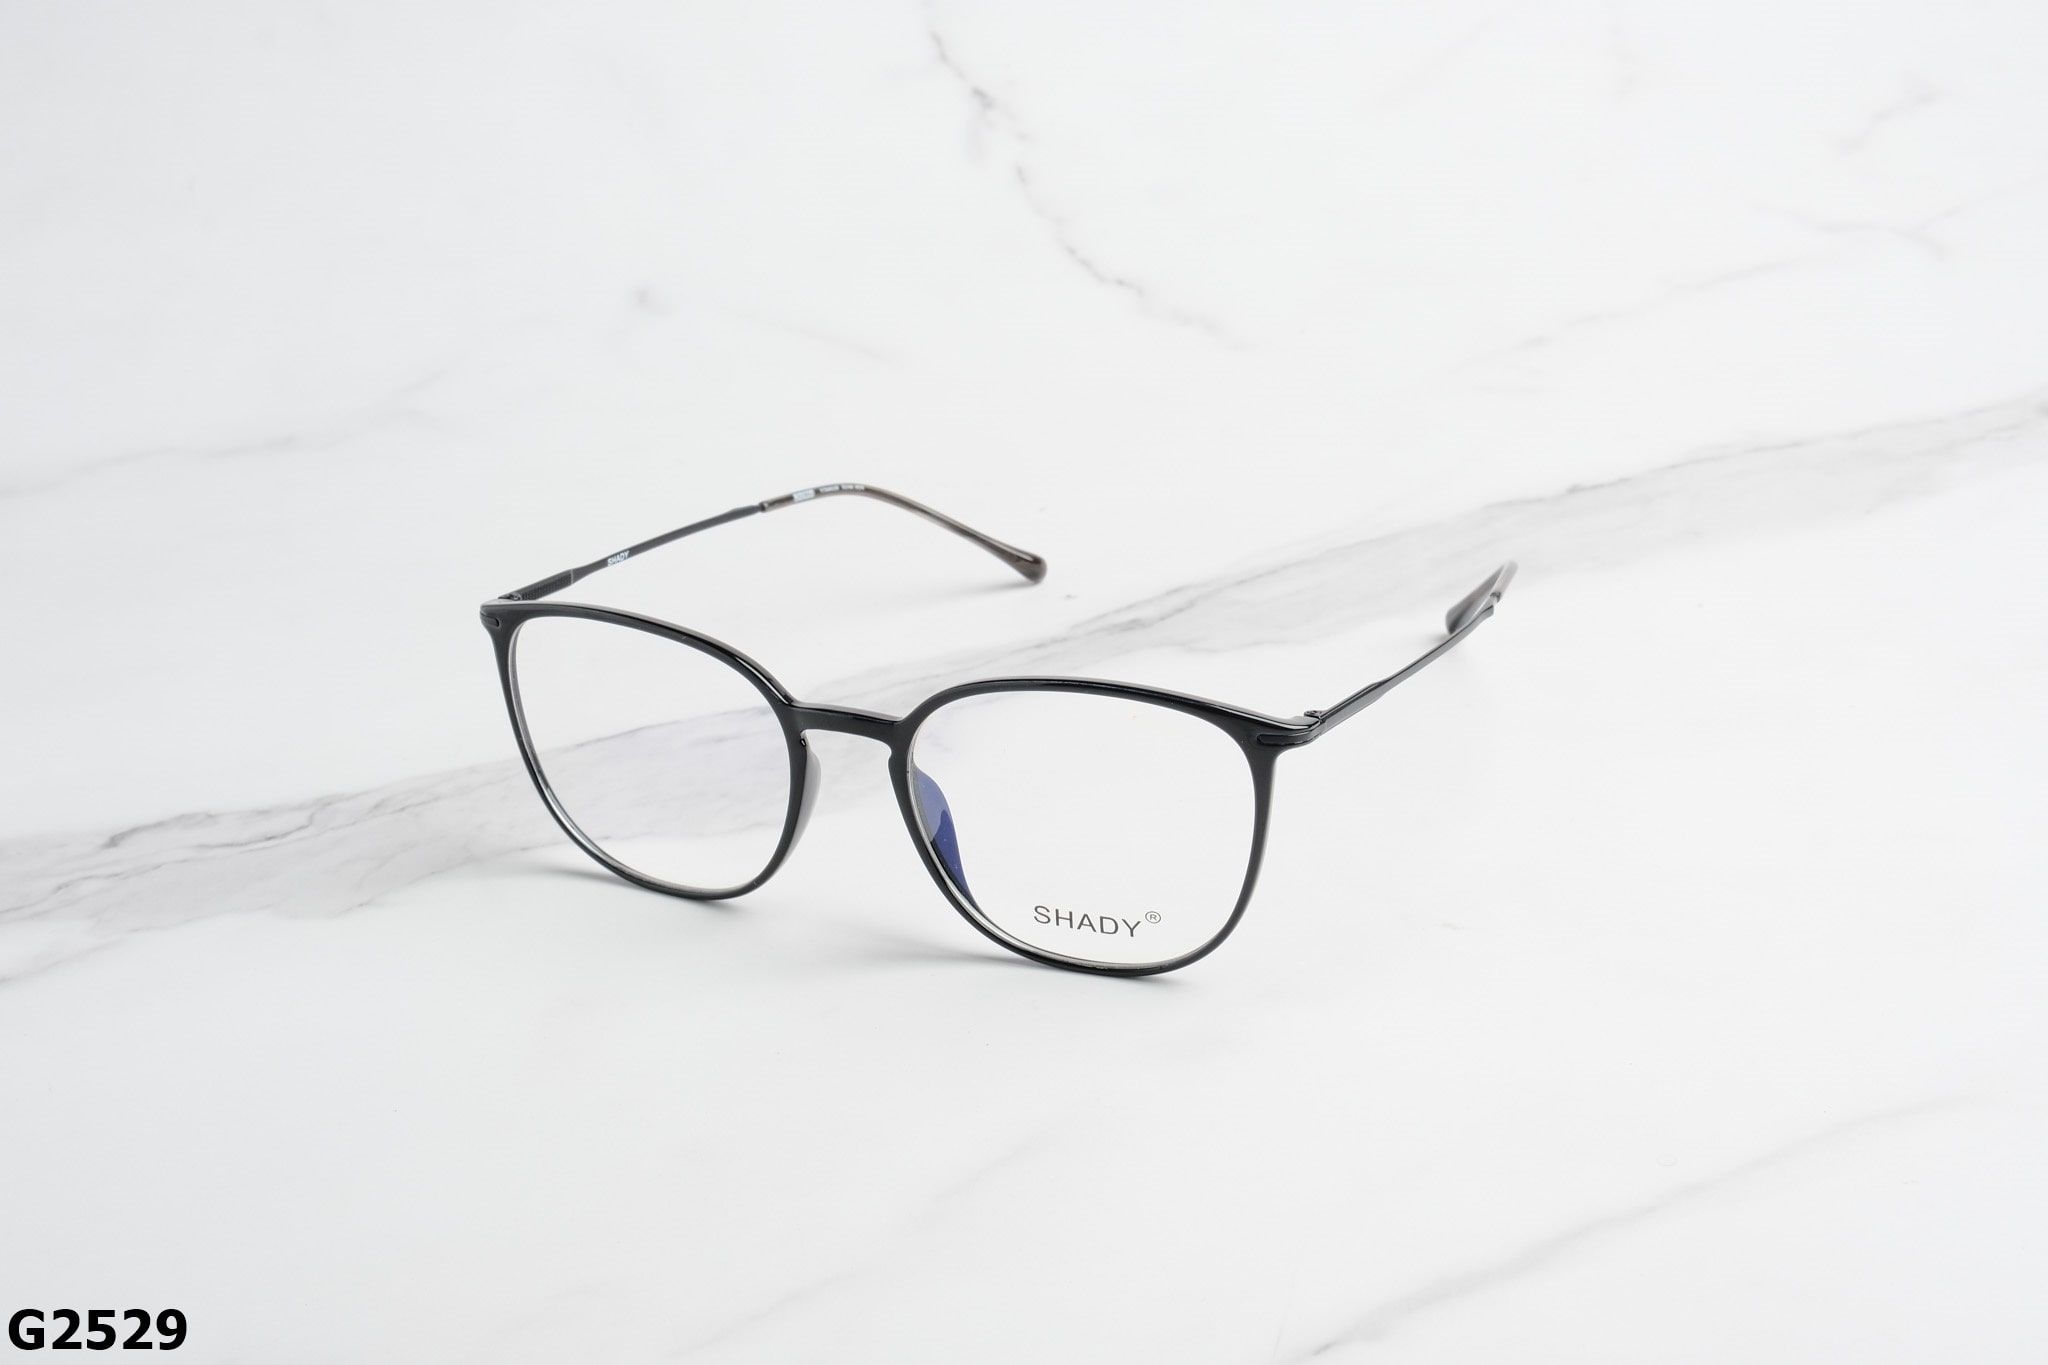  SHADY Eyewear - Glasses - G2529 